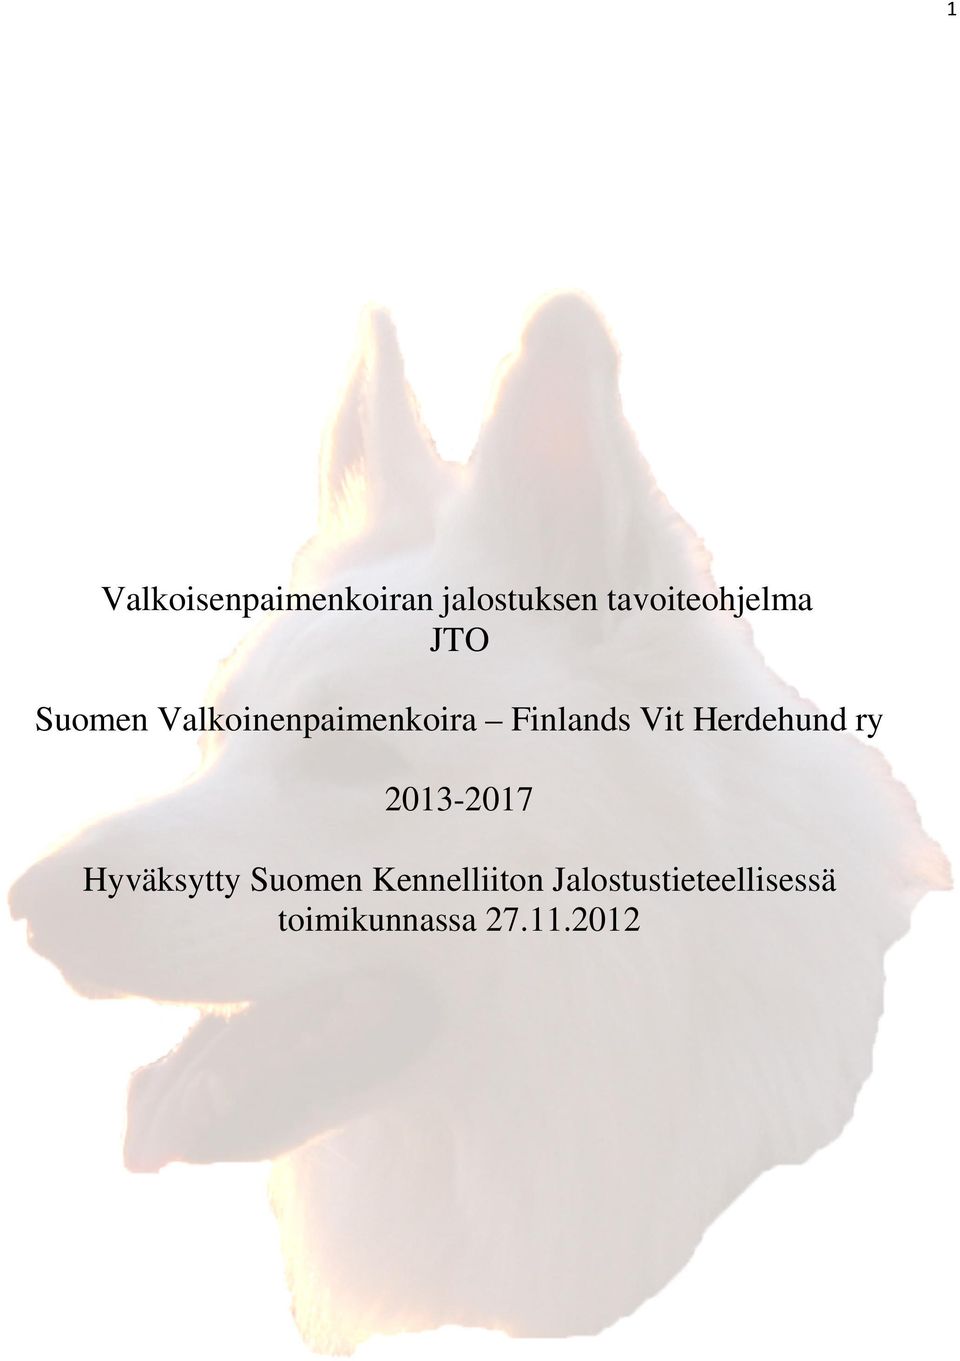 Finlands Vit Herdehund ry 2013-2017 Hyväksytty